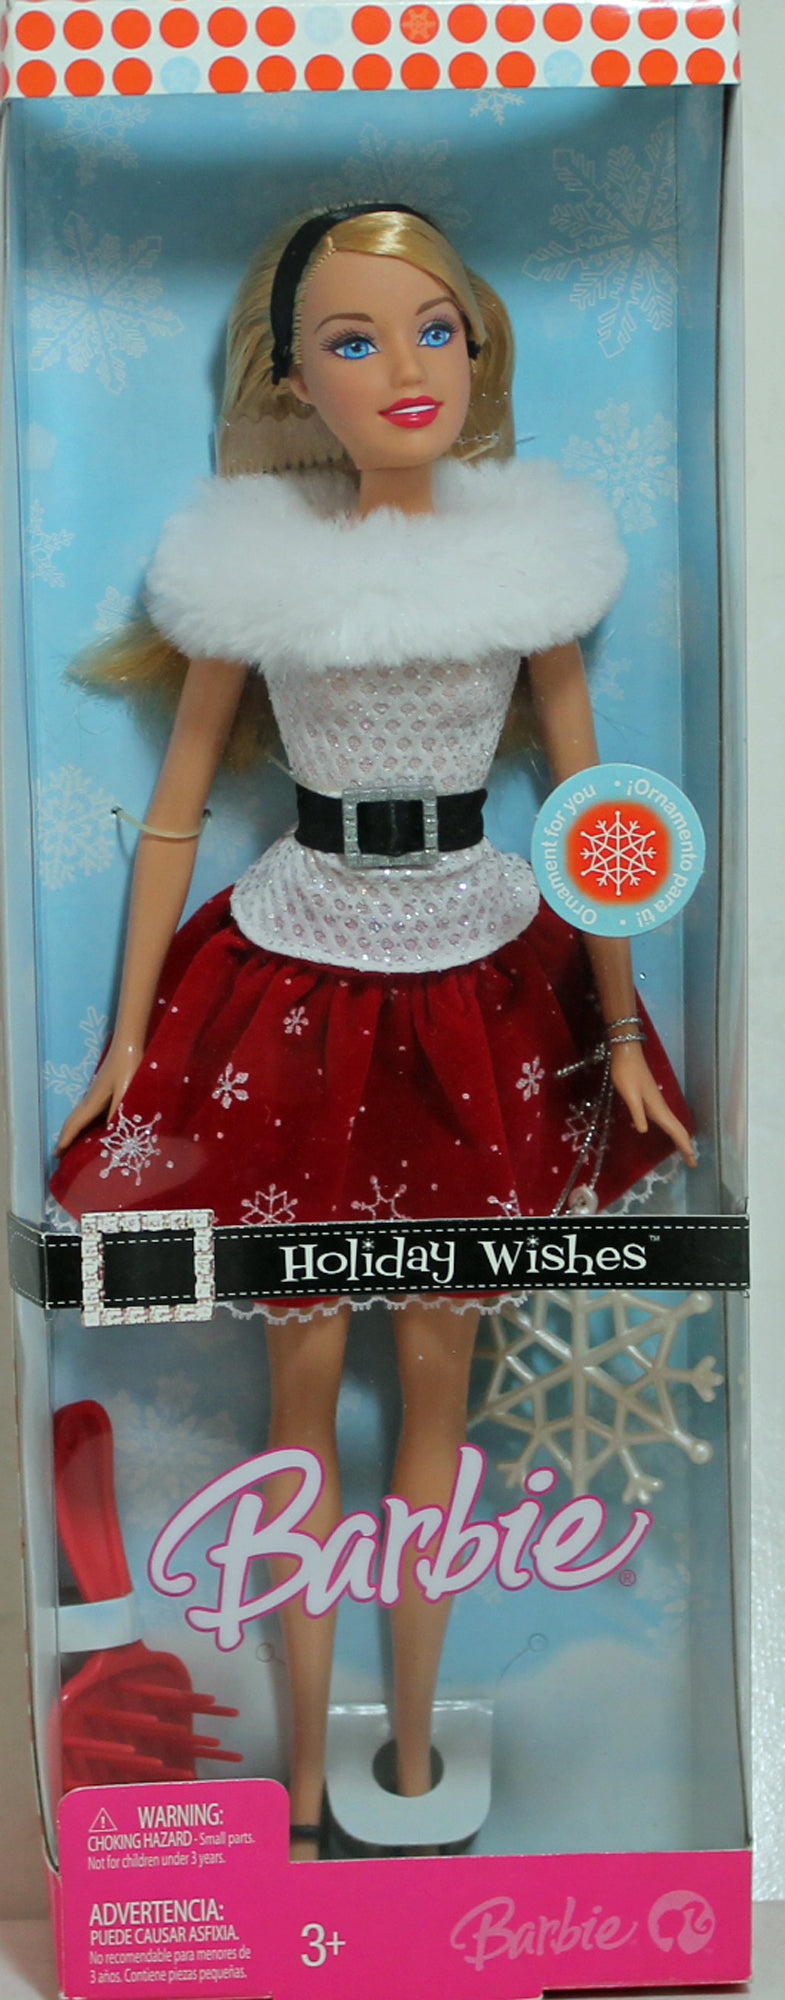 Barbie バービー Holiday Wishes Doll 人形 ドール :87019608:ワールド